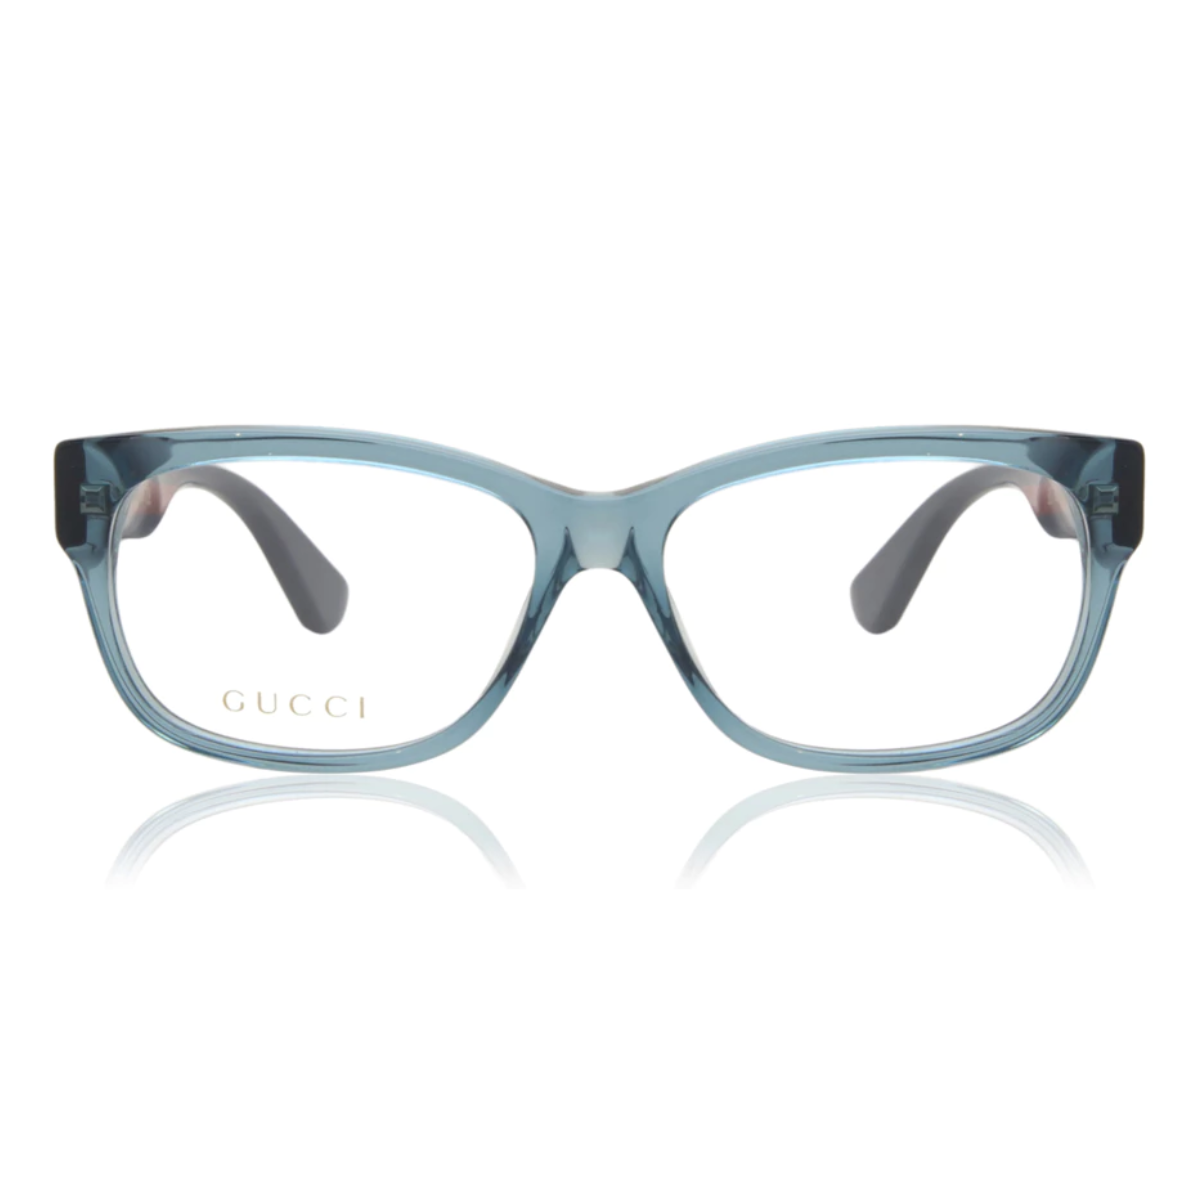 "Gucci 0278O Optical Frames: Unisex Style"